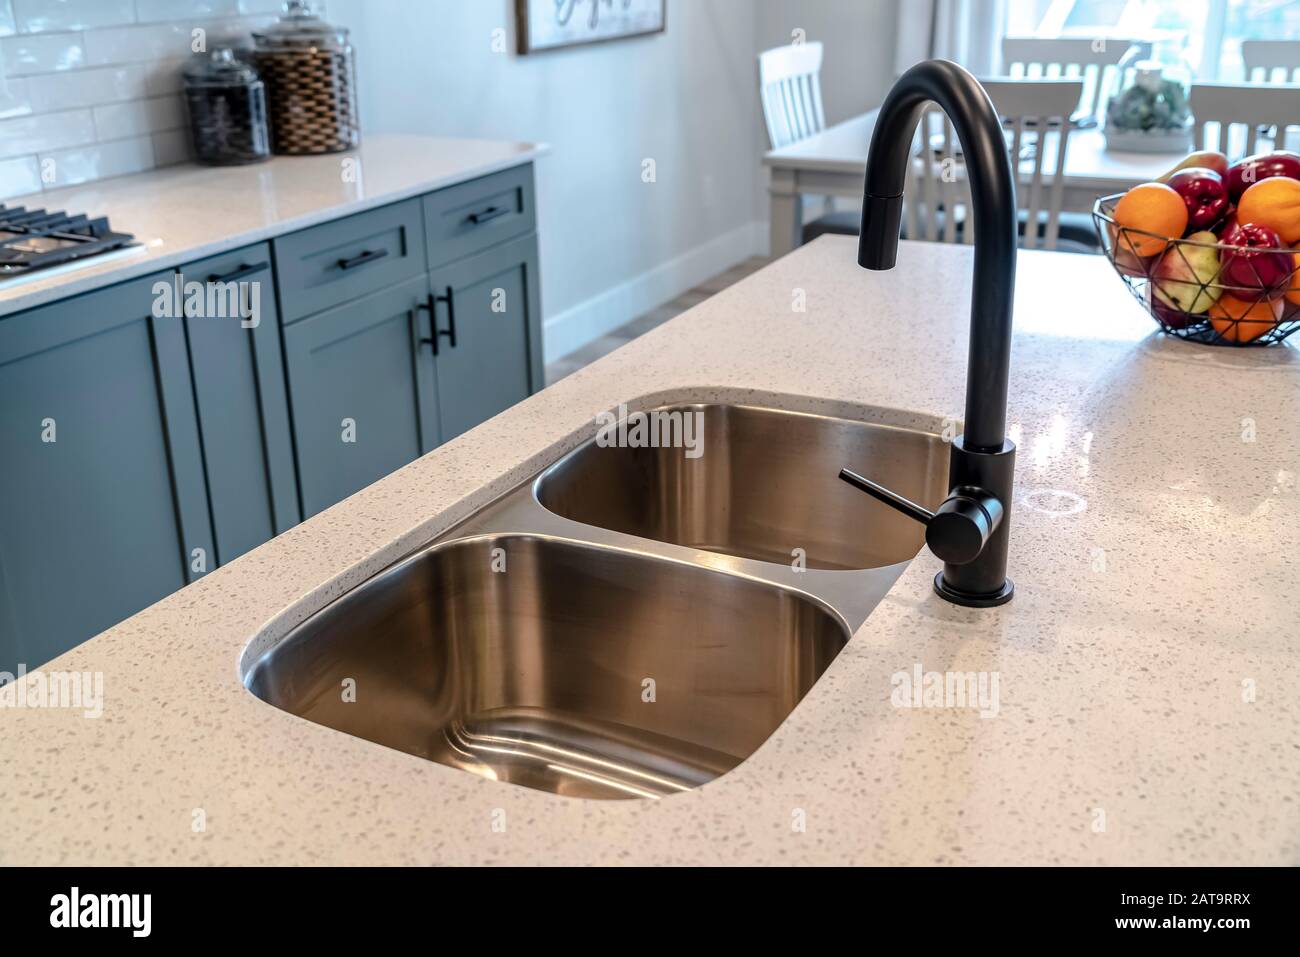 Stainless Steel Undermount Double Basin Kitchen Island Sink With